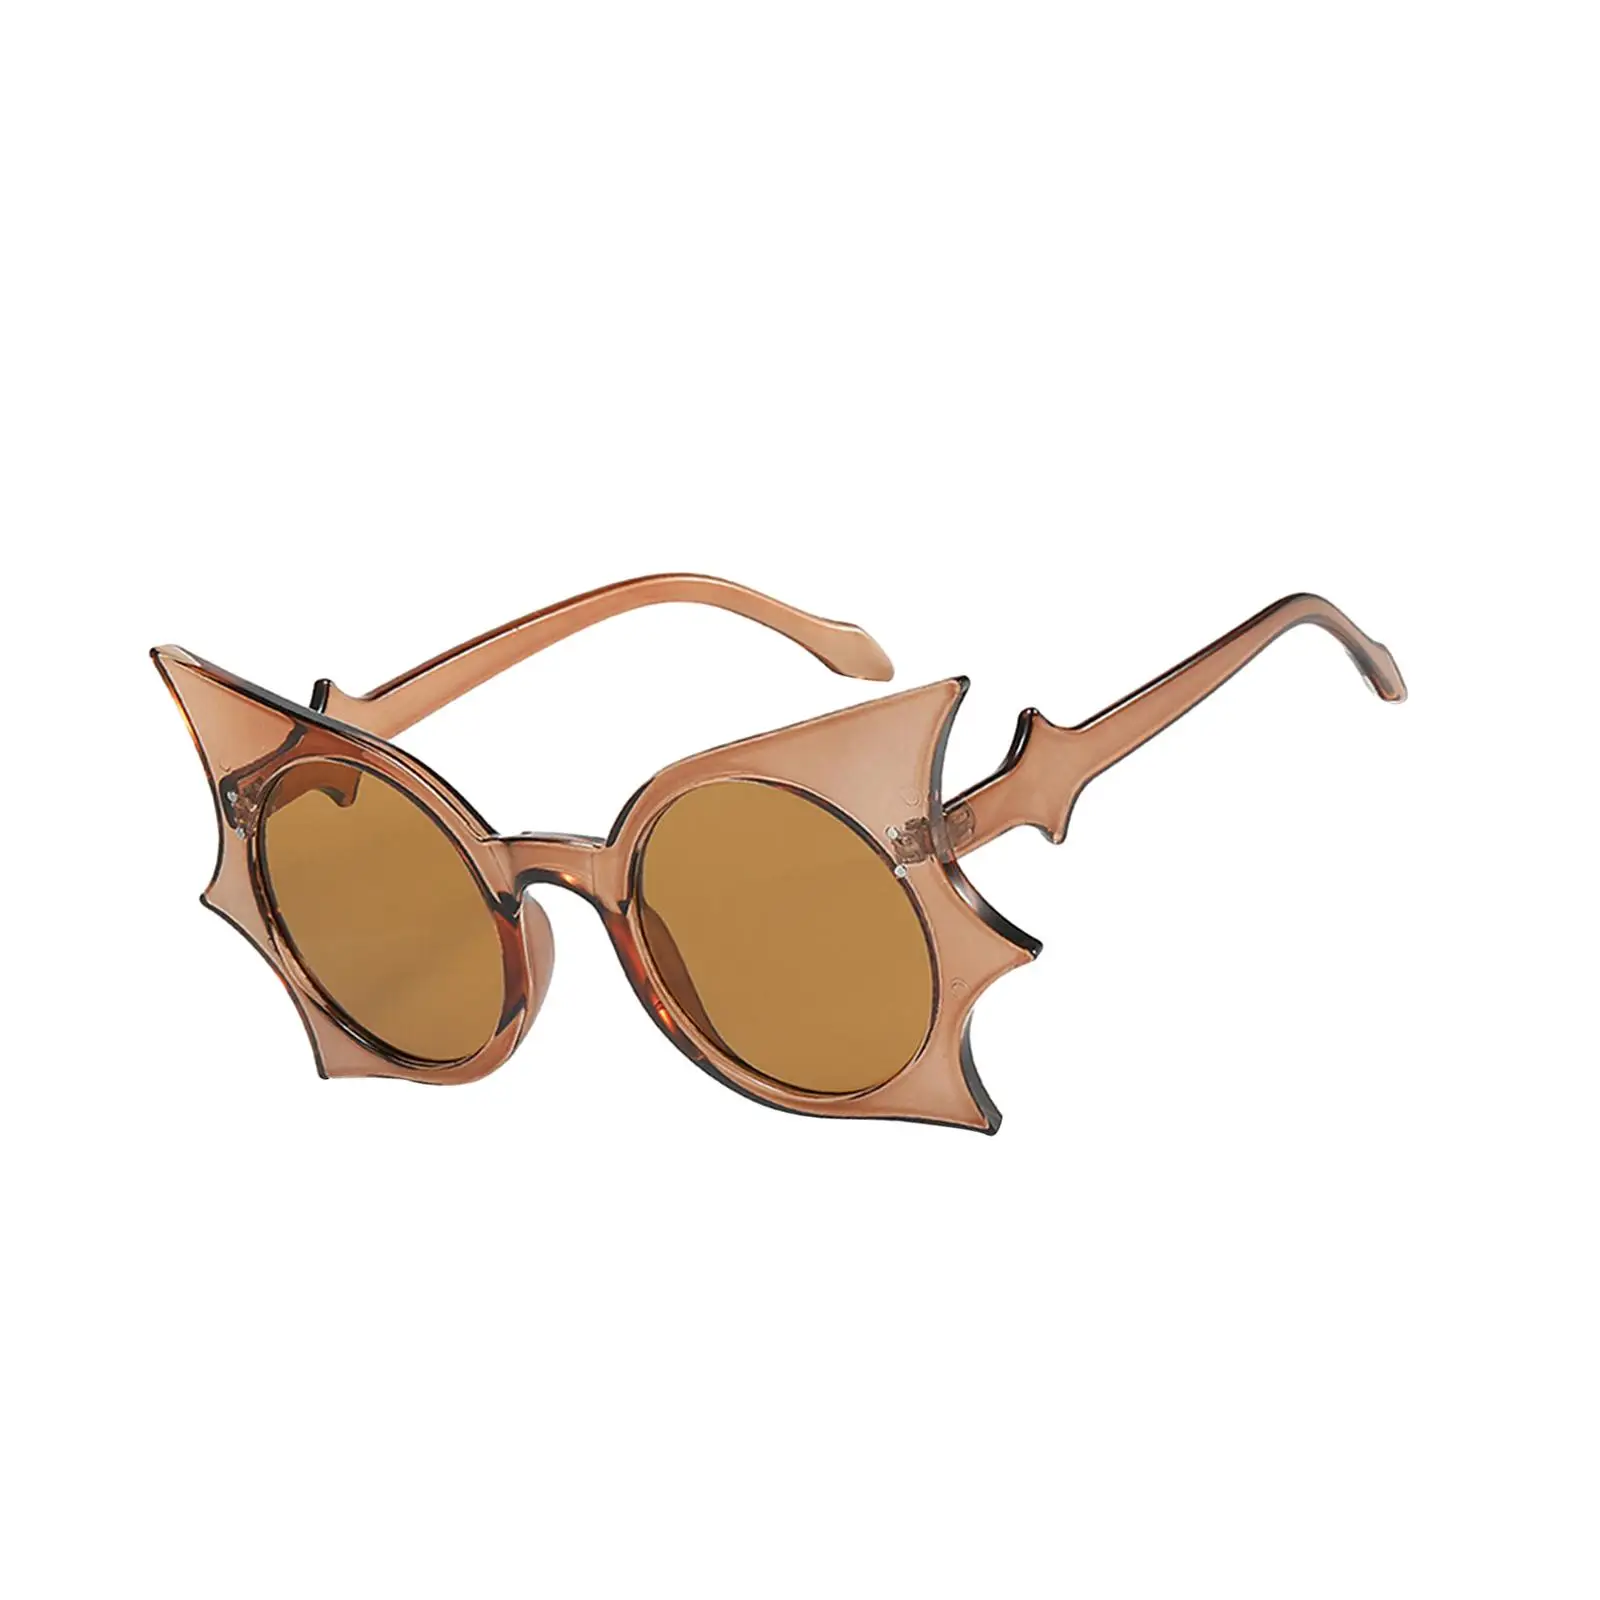 Bat Shape Sunglasses Costume Accessories Eyewear for Travel Vacation Hiking